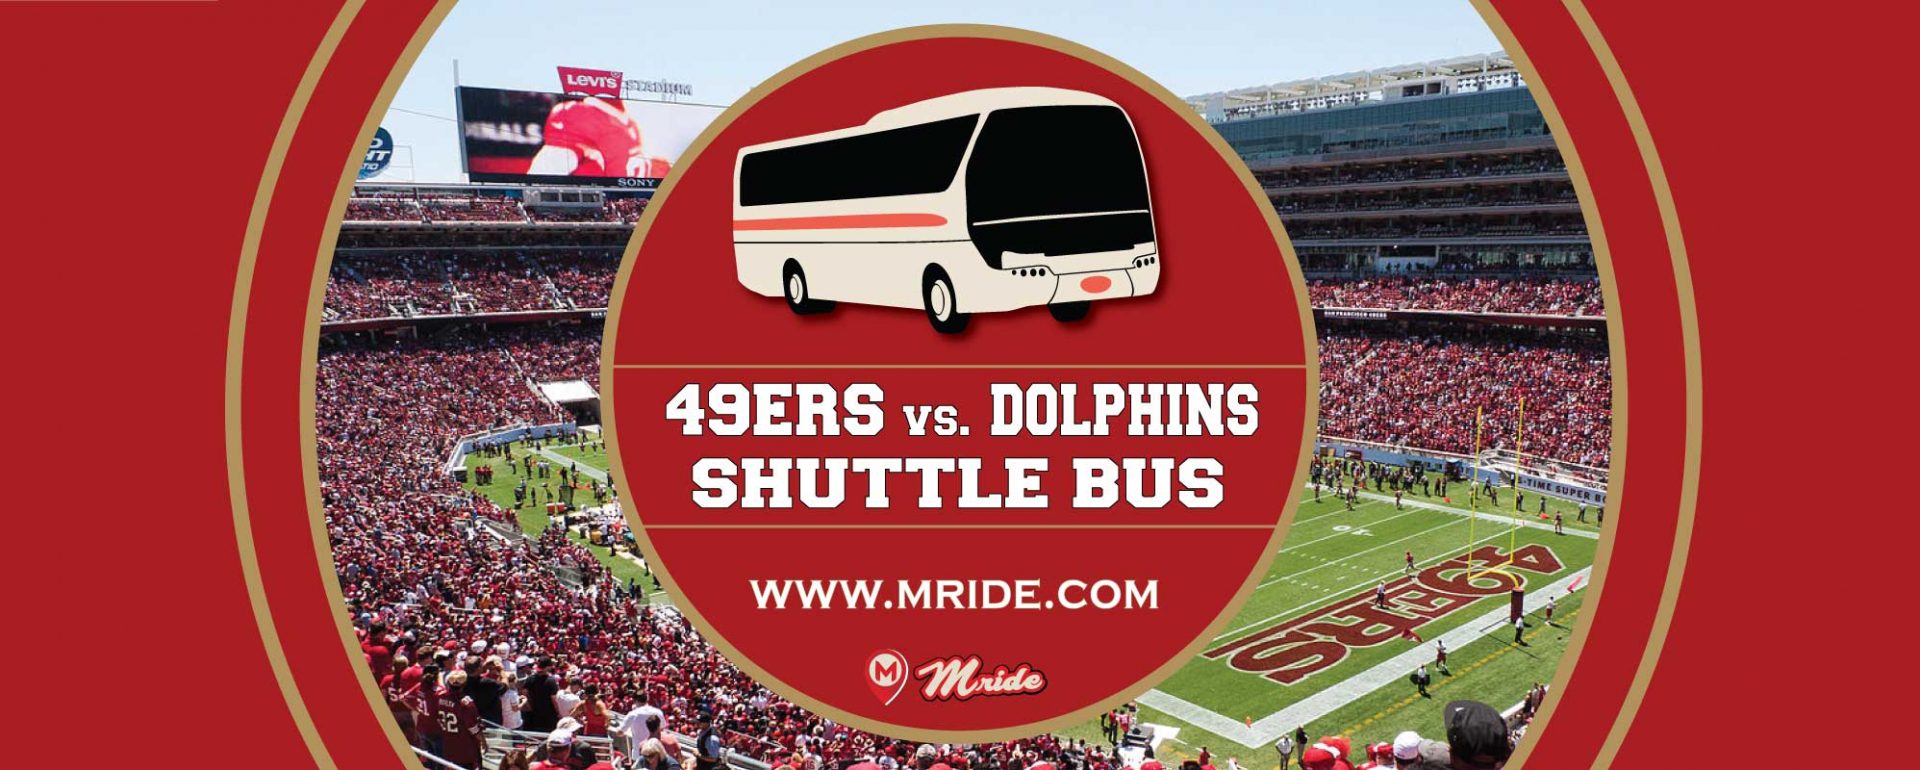 49ers vs. Dolphins Shuttle Bus